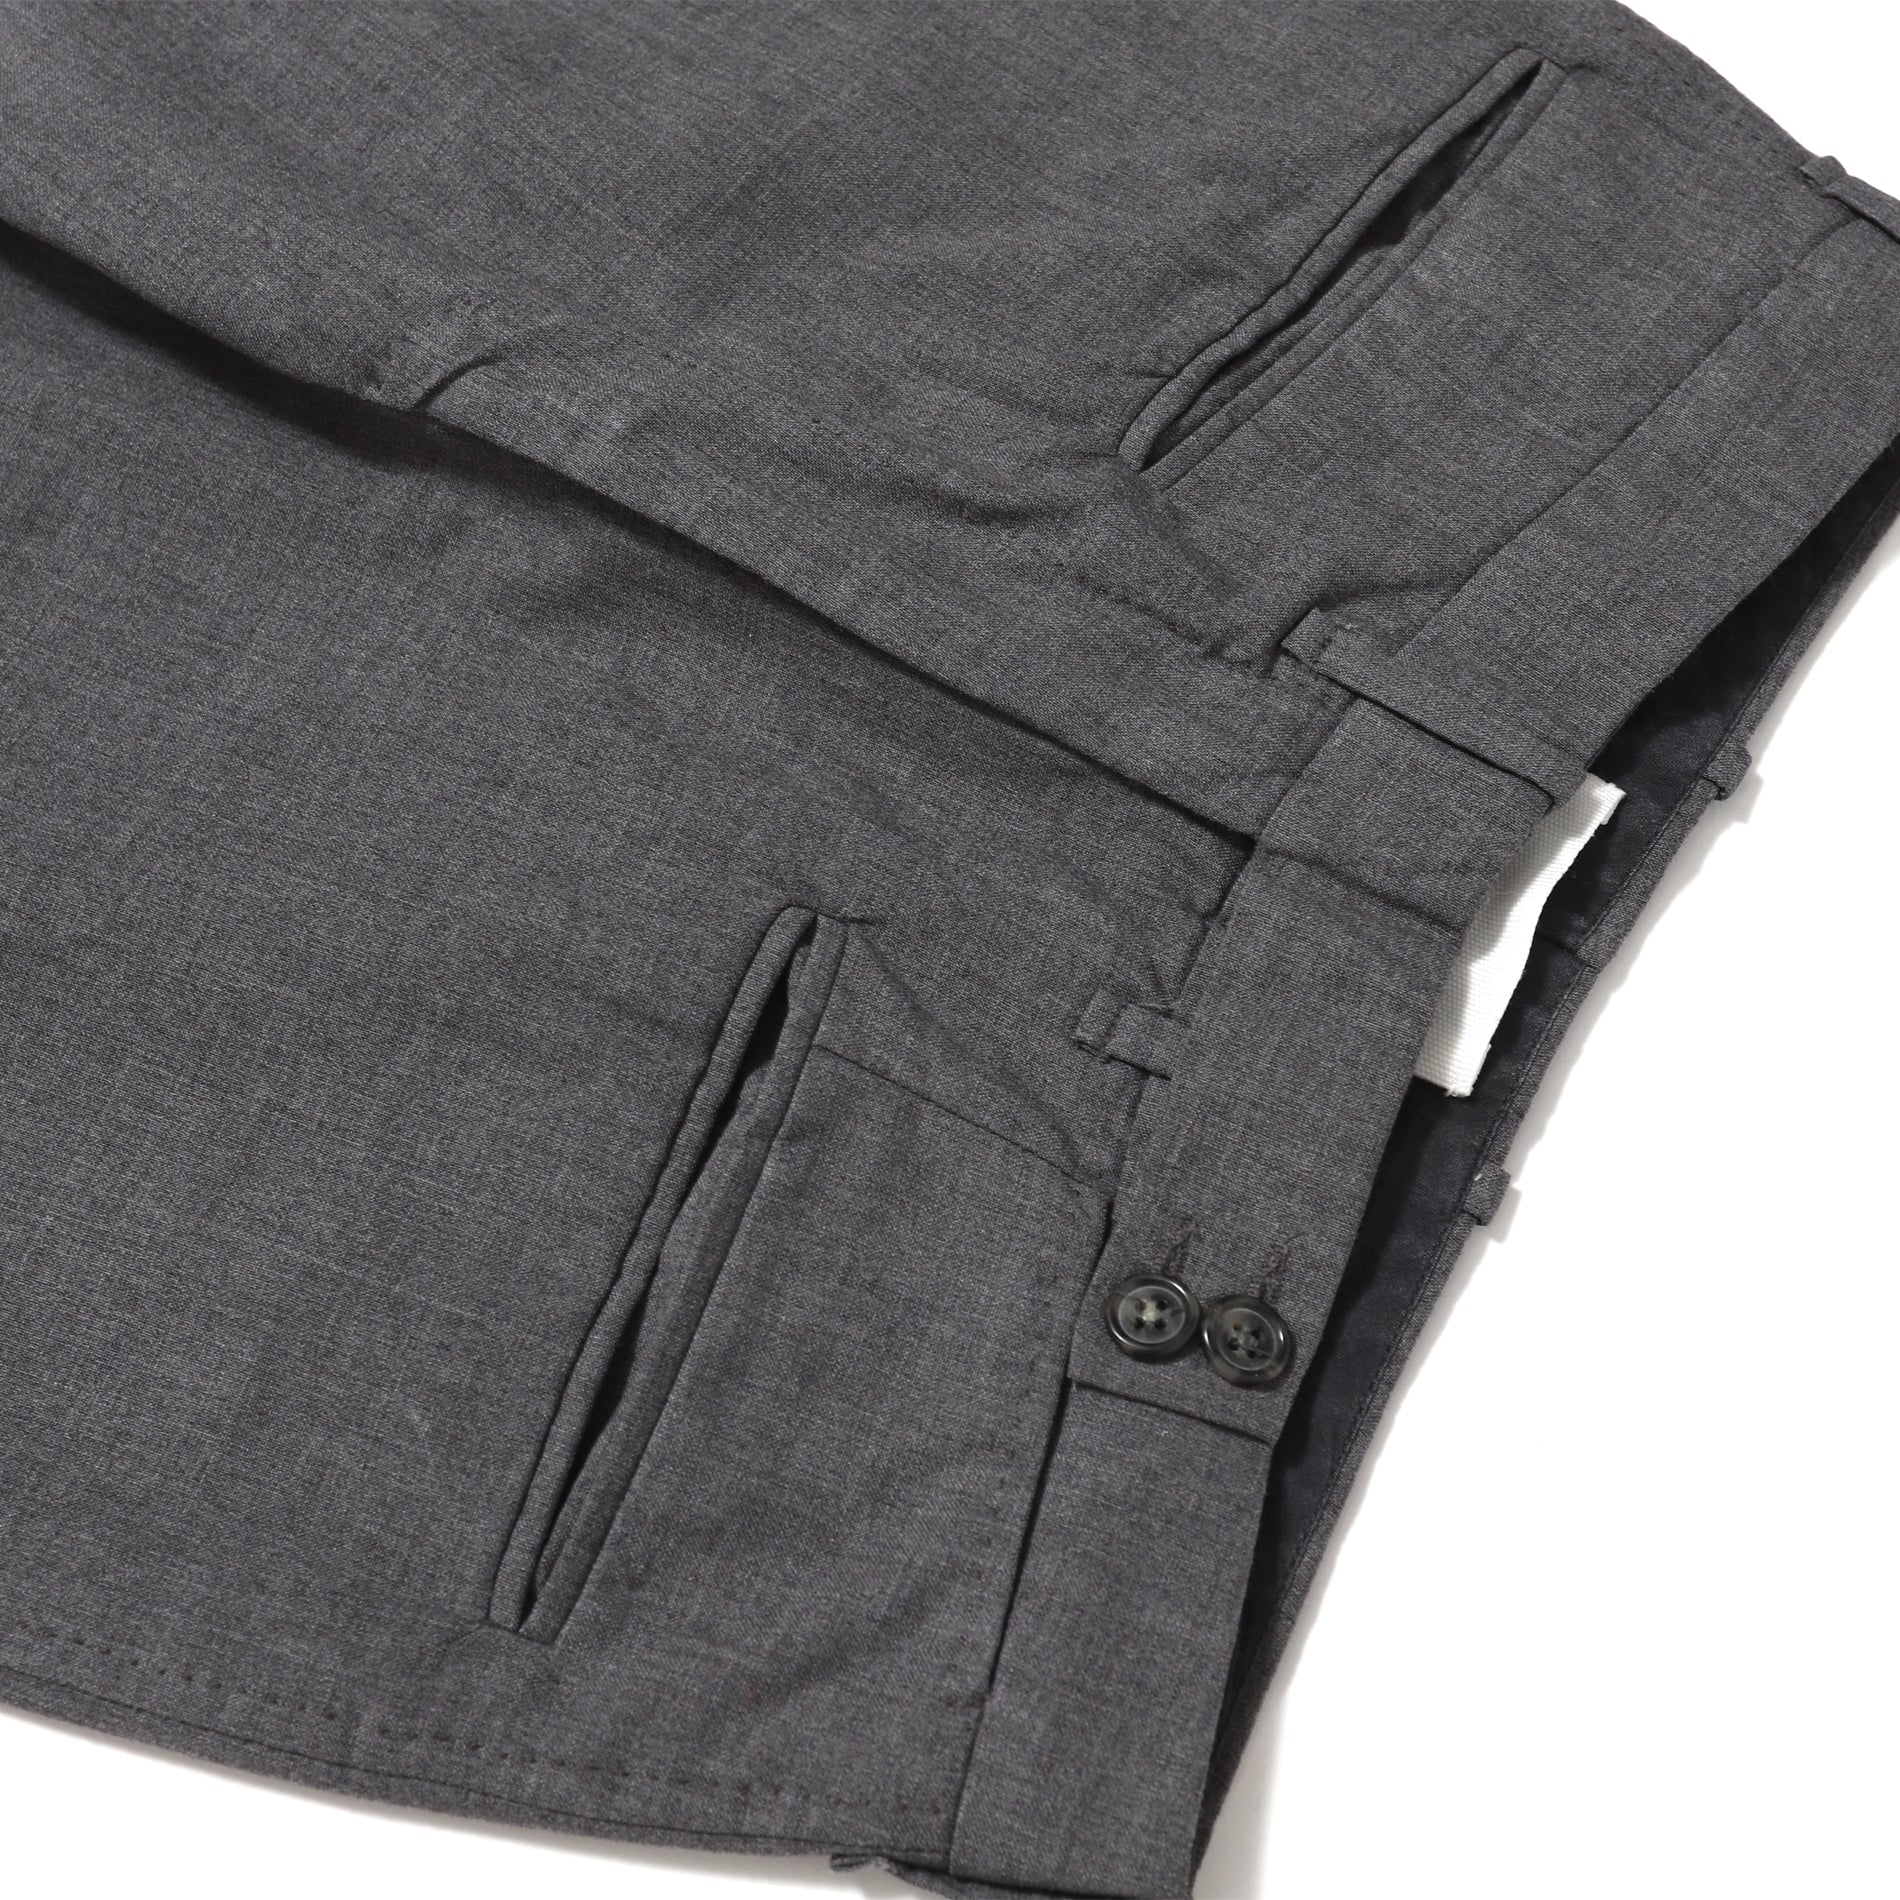 Maison Martin Margiela SS01 Reversed Double Back Pants - Ākaibu Store